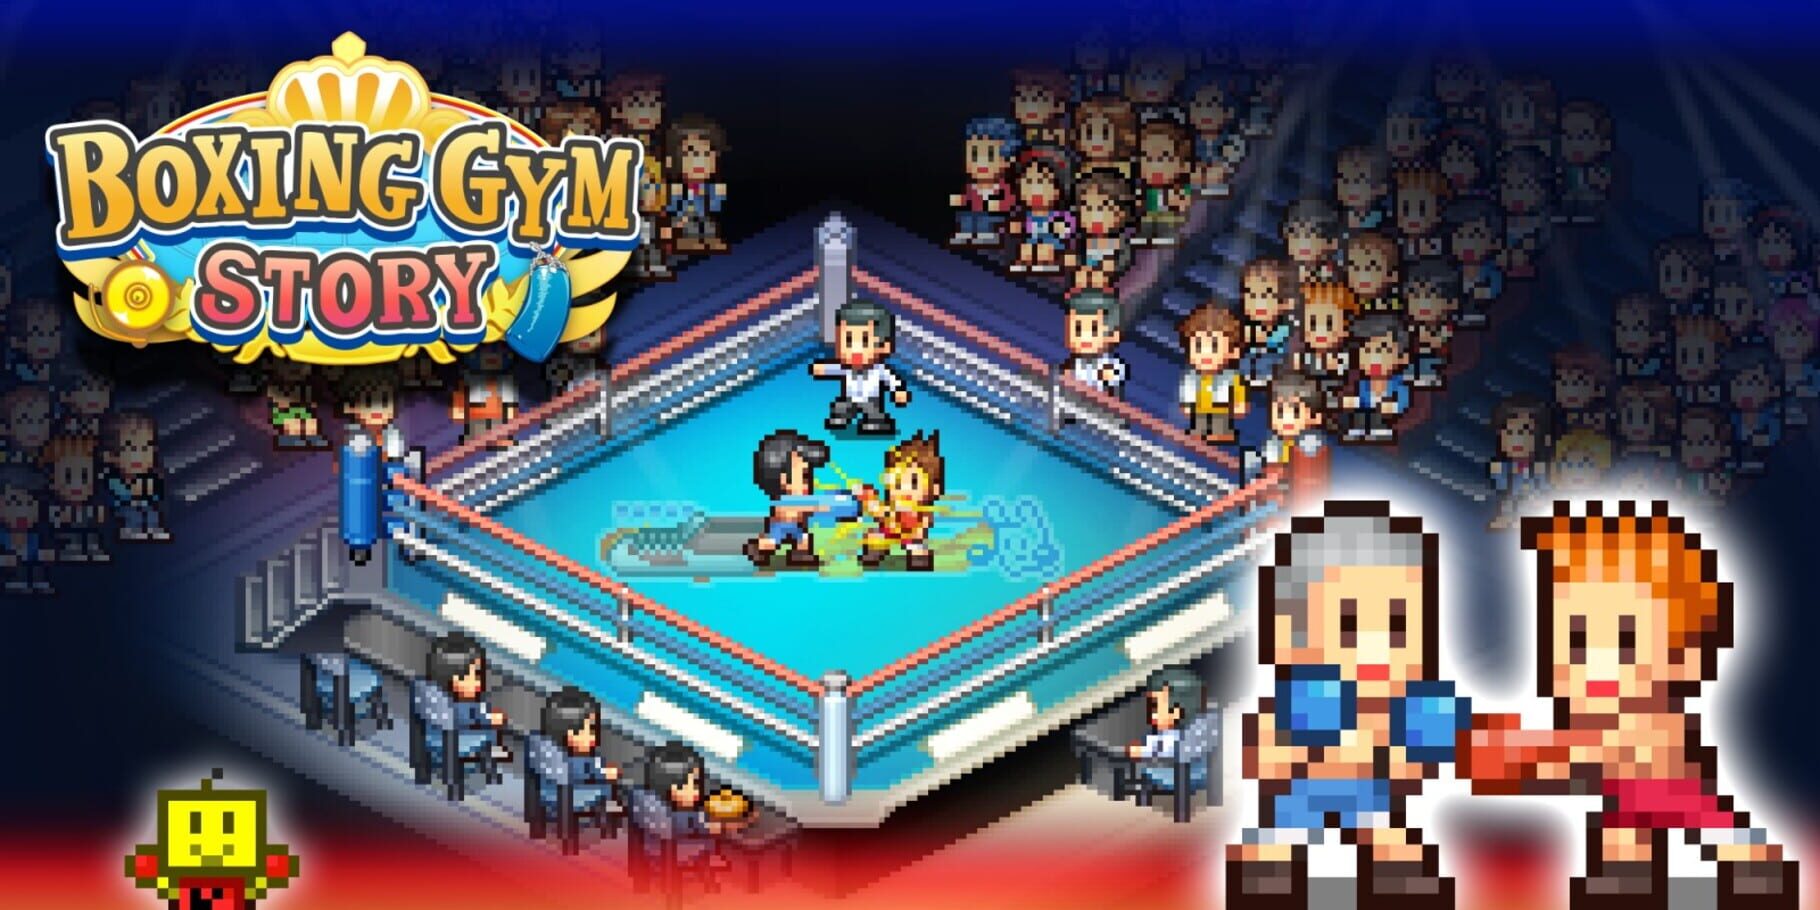 Boxing Gym Story artwork